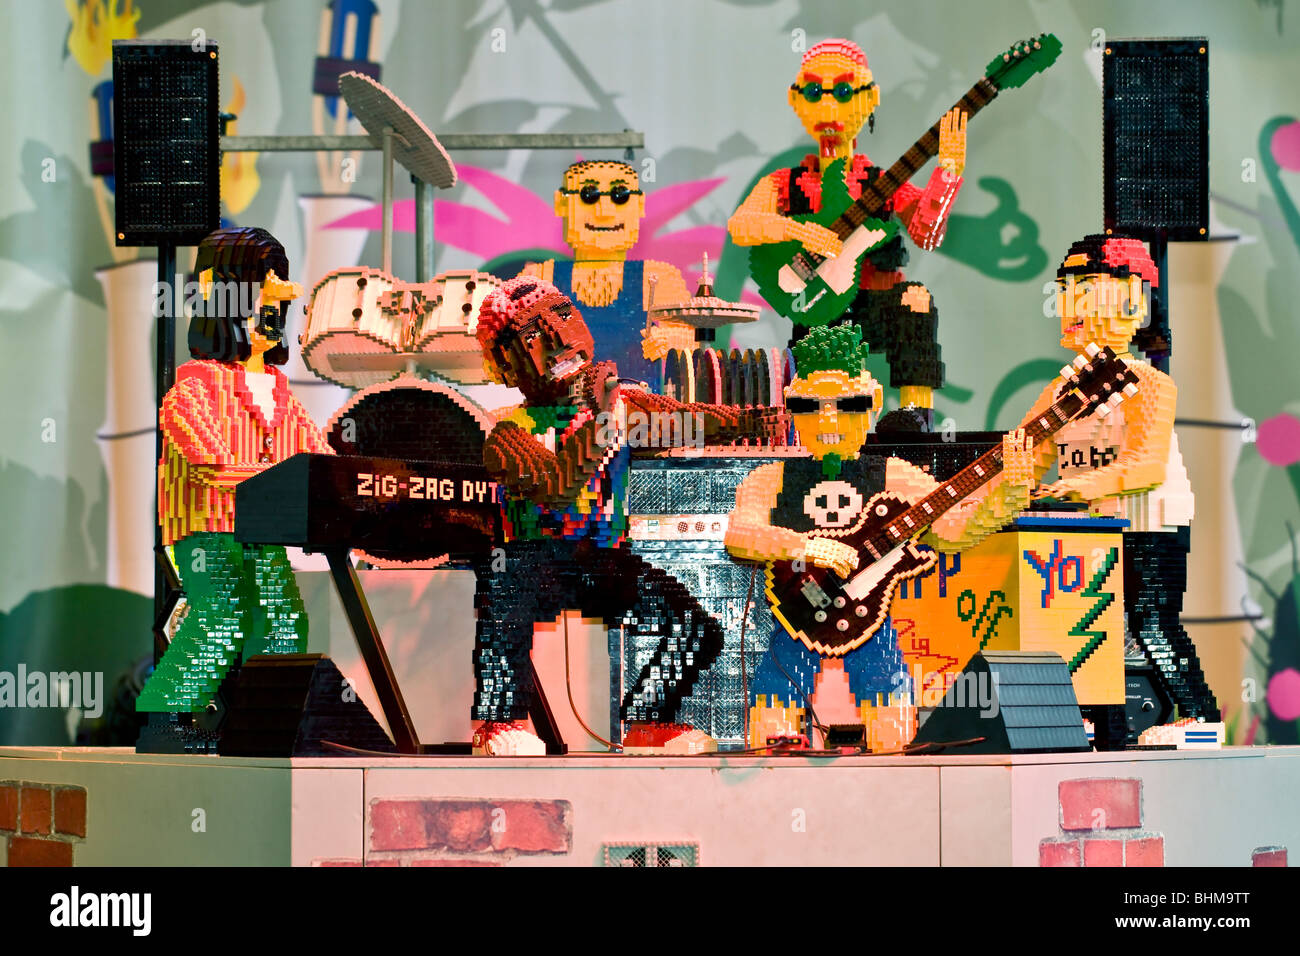 Pop group made from Lego bricks Stock Photo